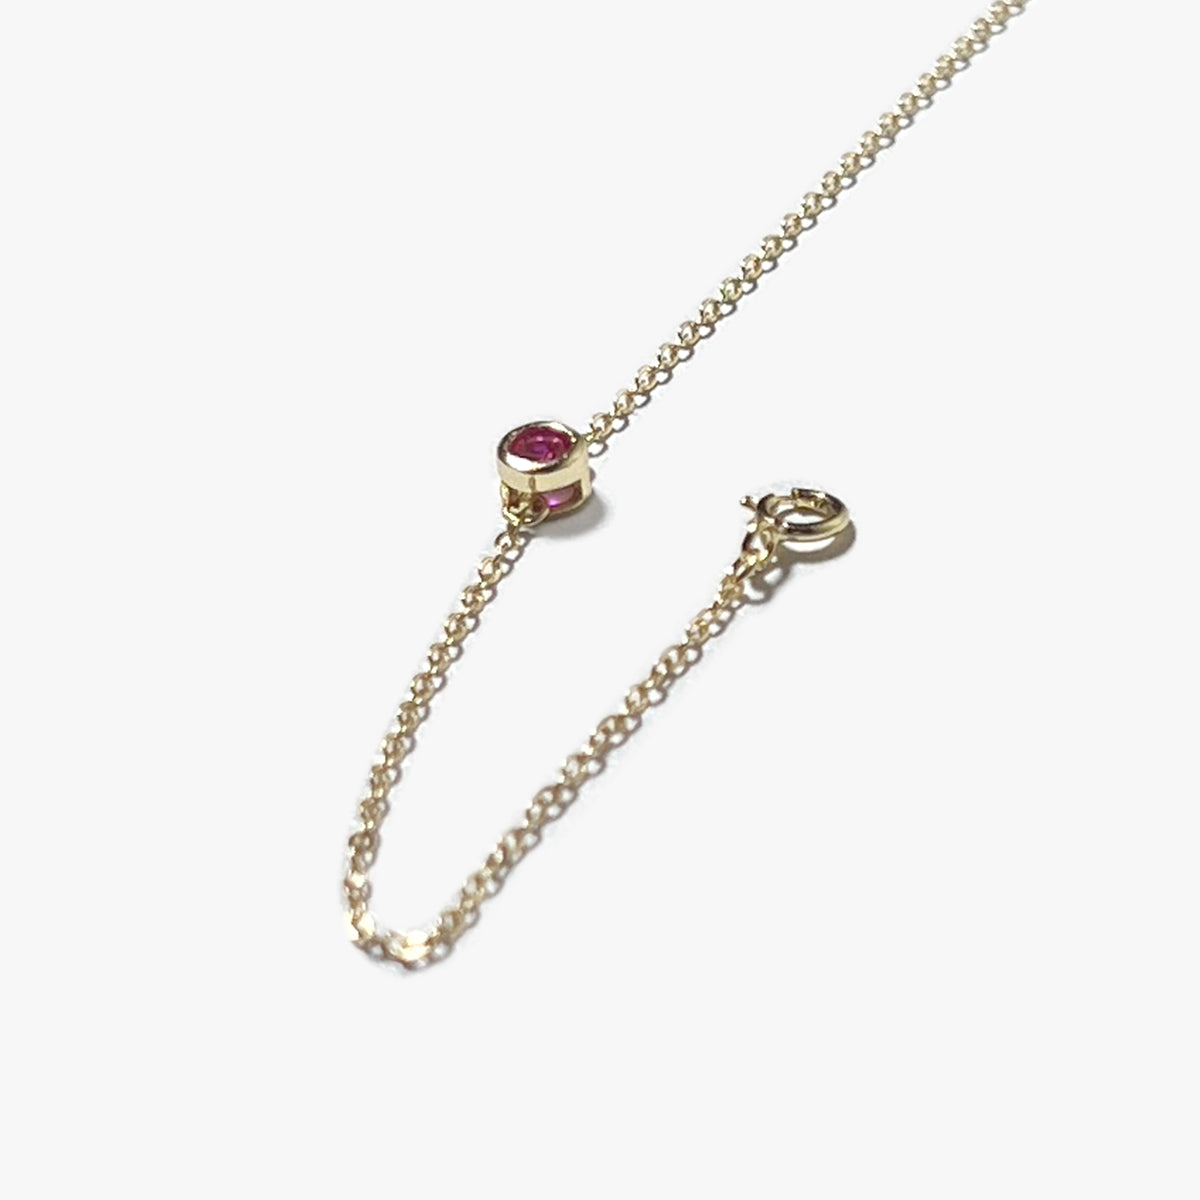 The Mini Ruby Solitaire Bracelet